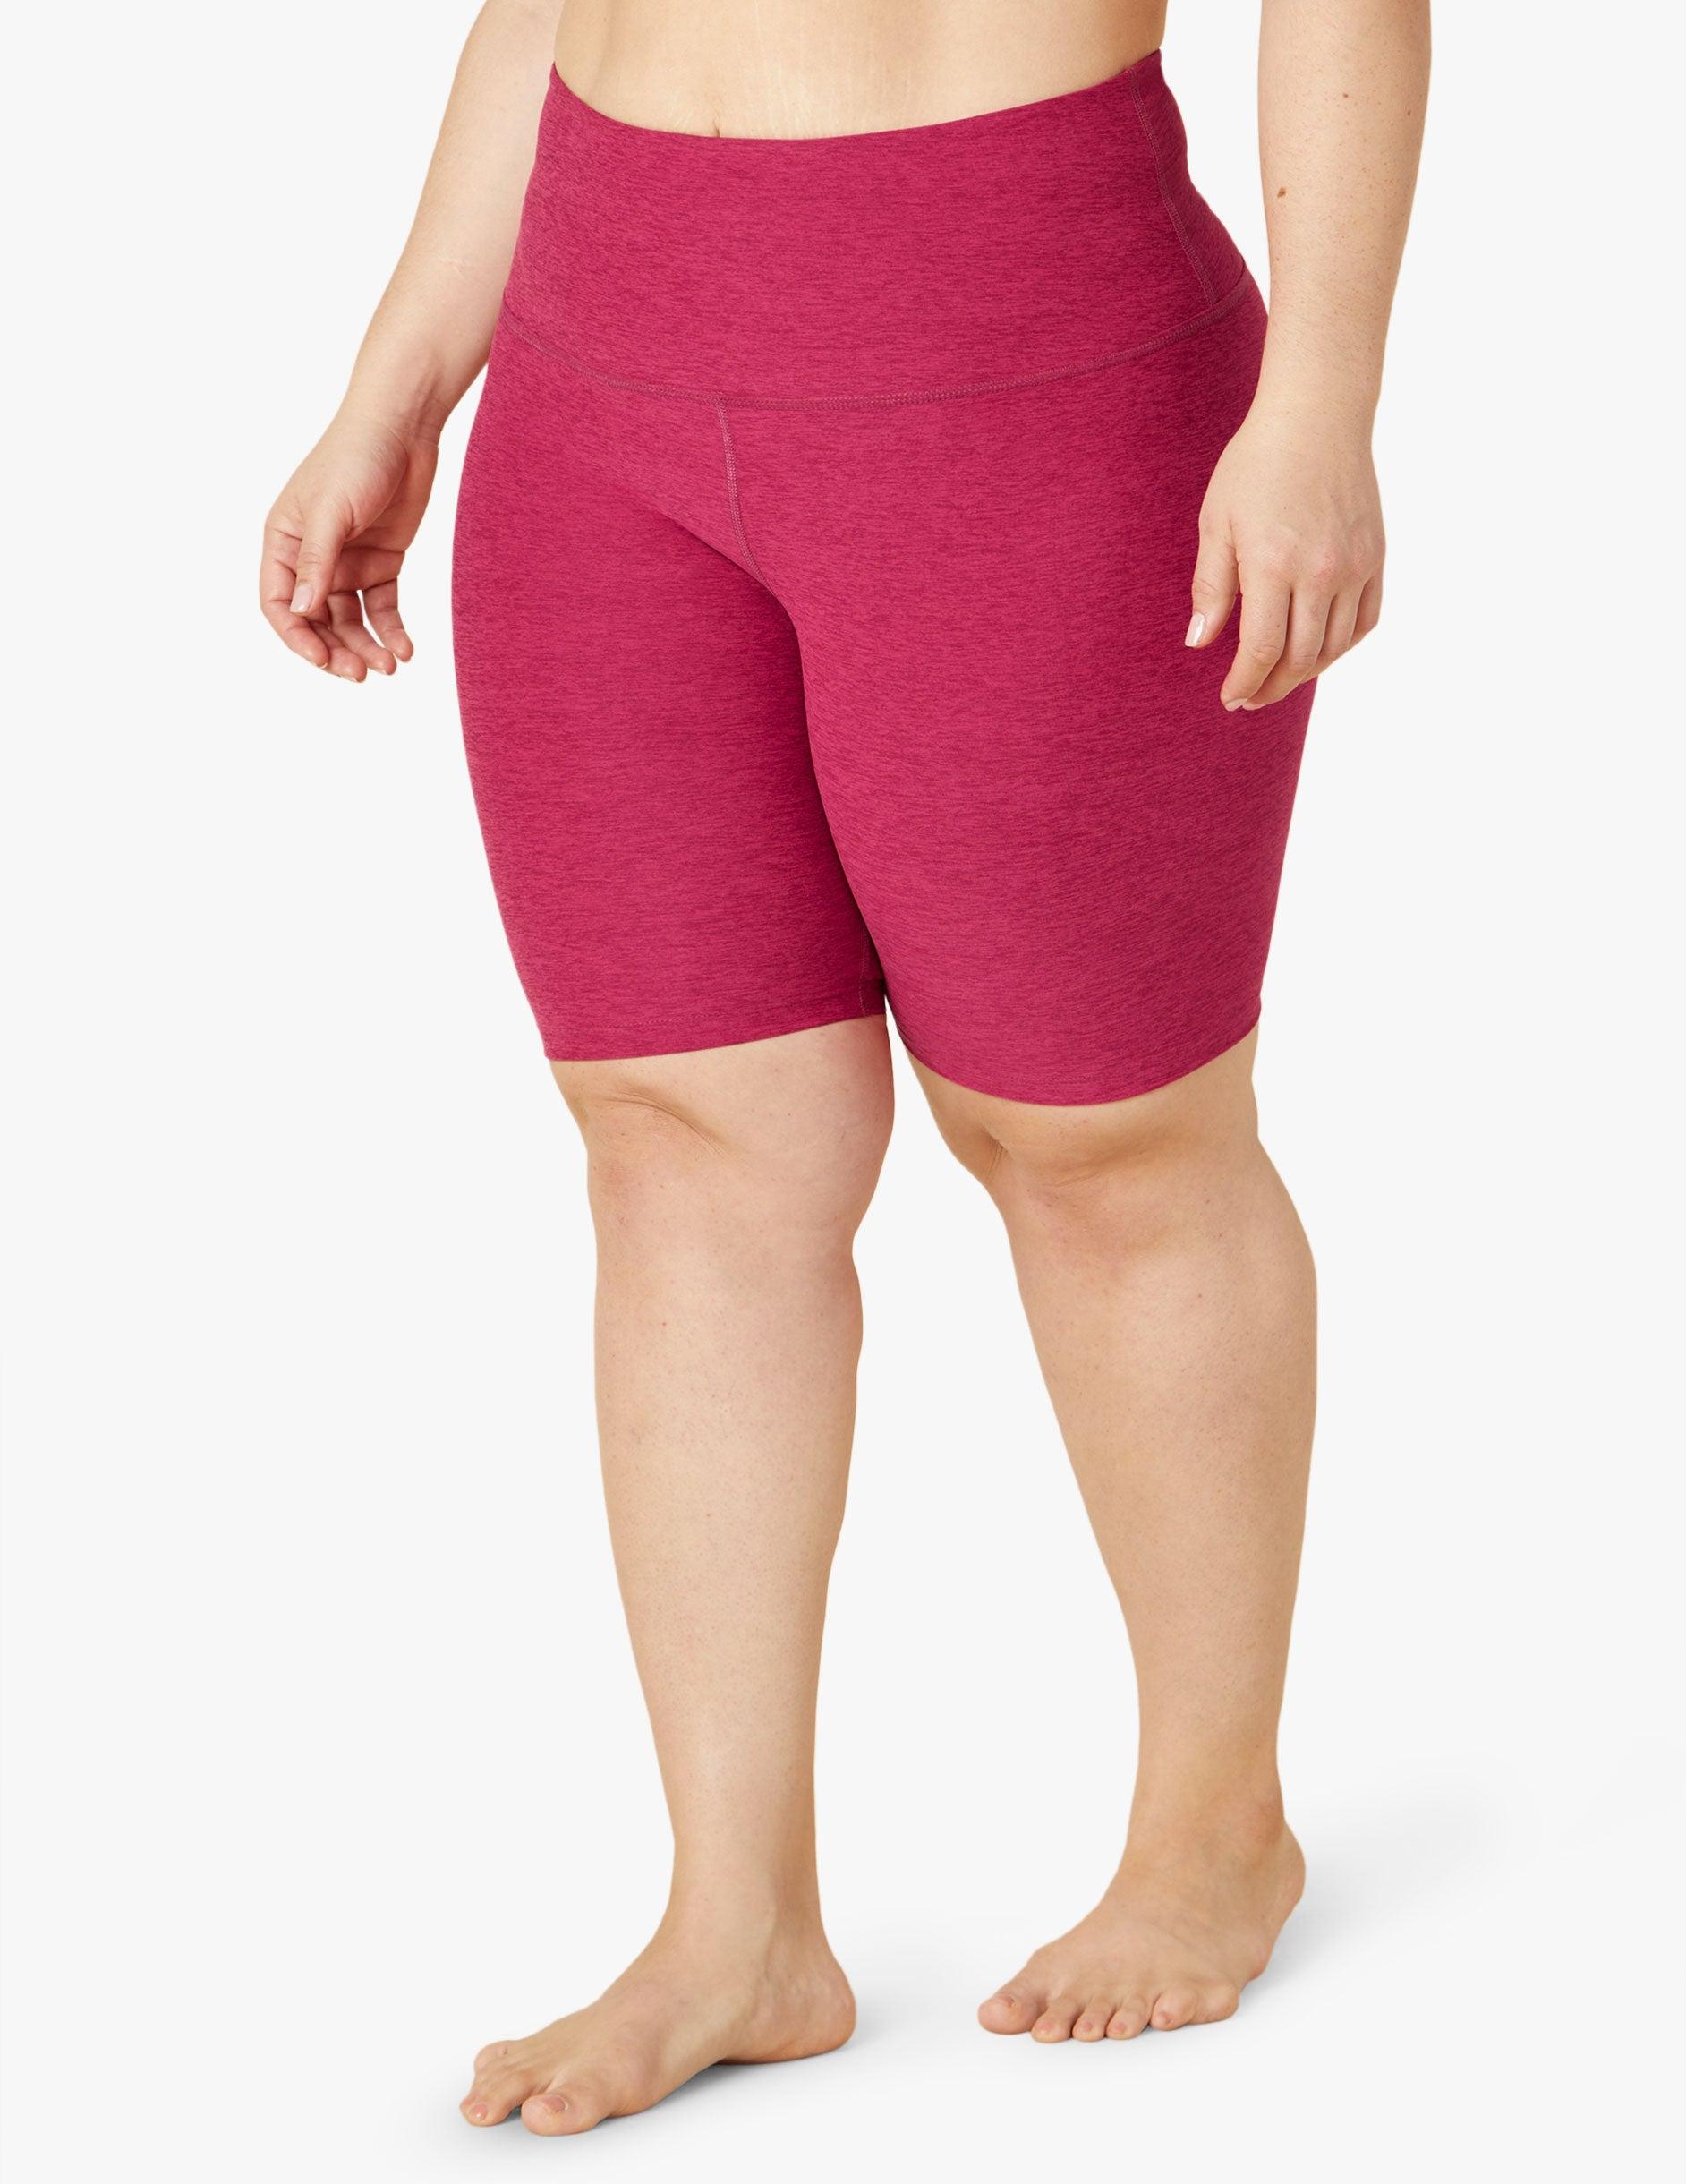 1x-4x in Red Beyond Yoga Spacedye Biker Short Womens Clothing Shorts Mini shorts 